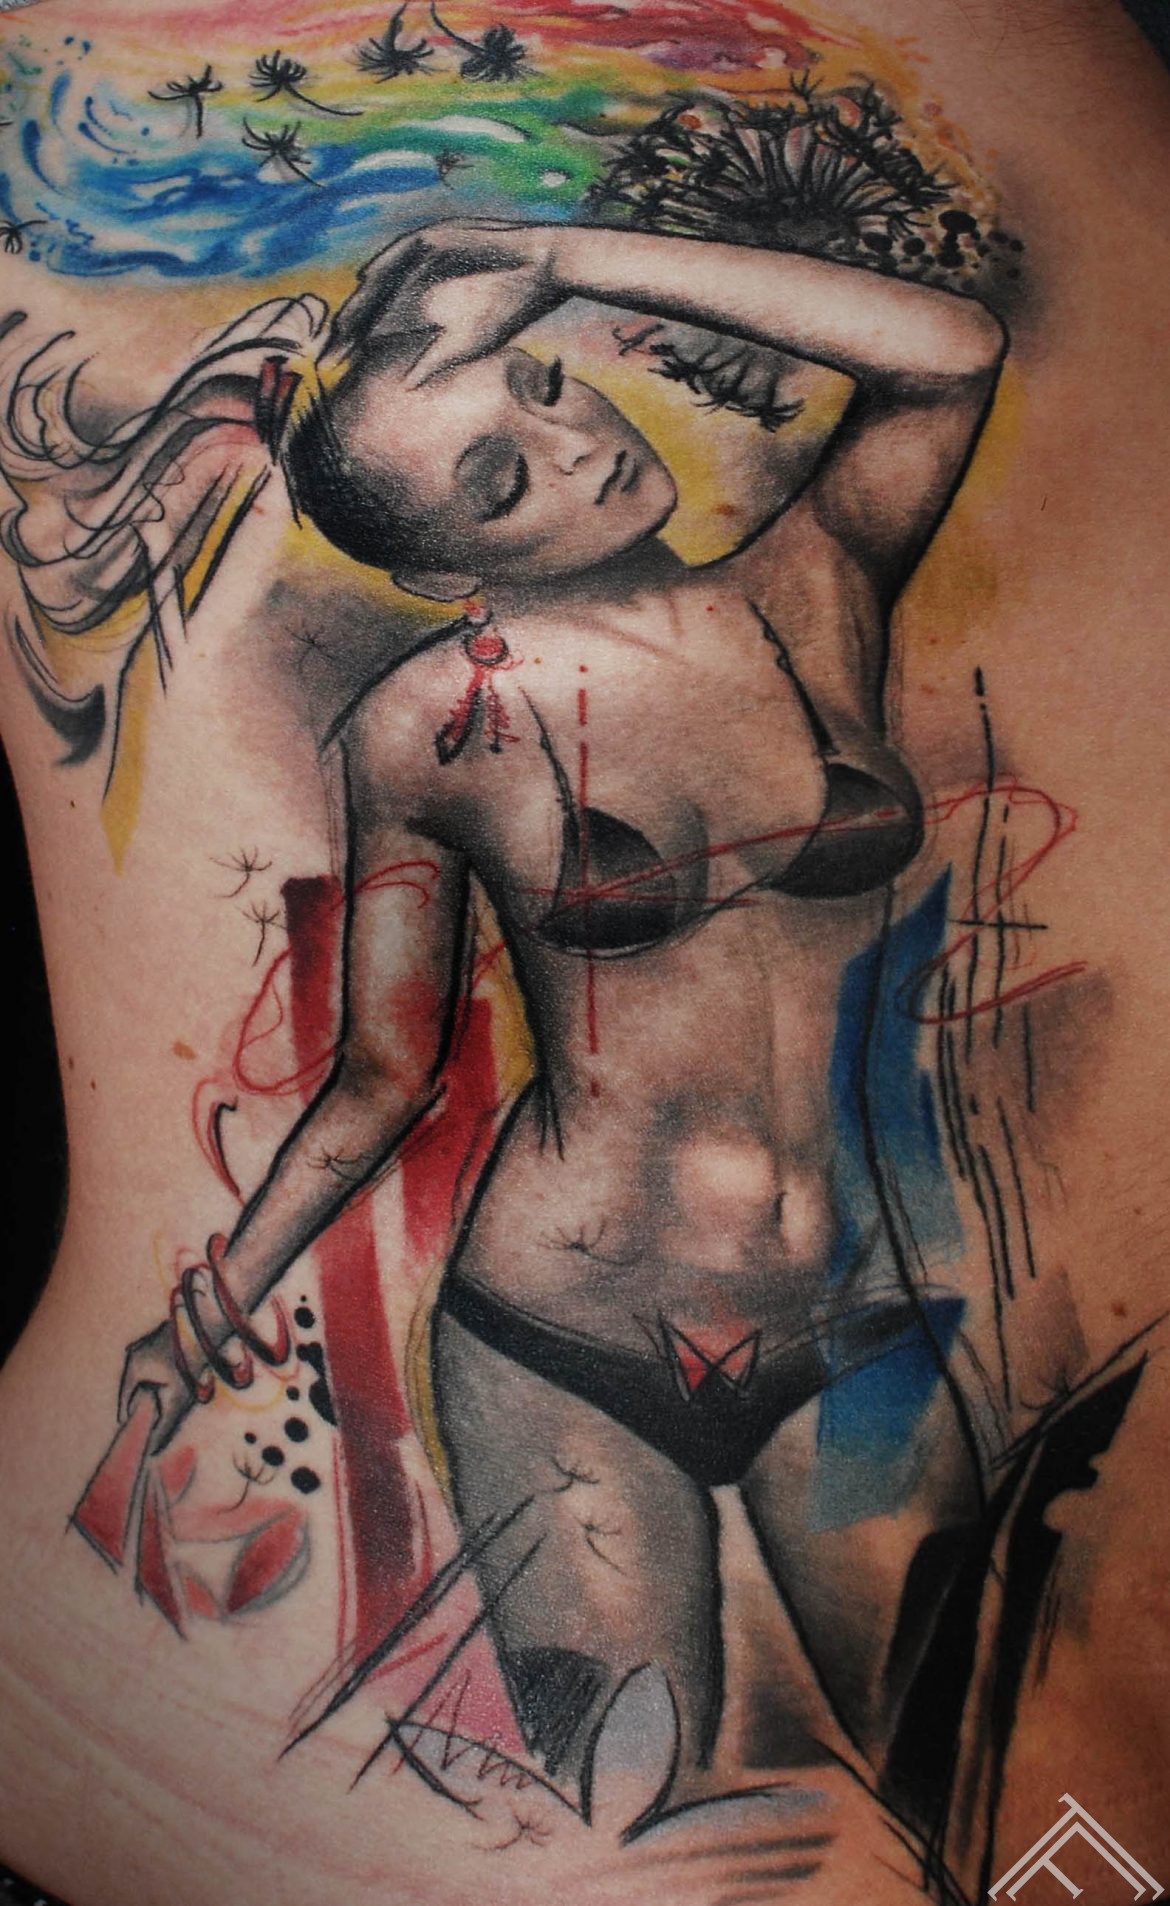 dancing-girl-sketch-graphic-trashpolka-tattoo-tattoofrequency